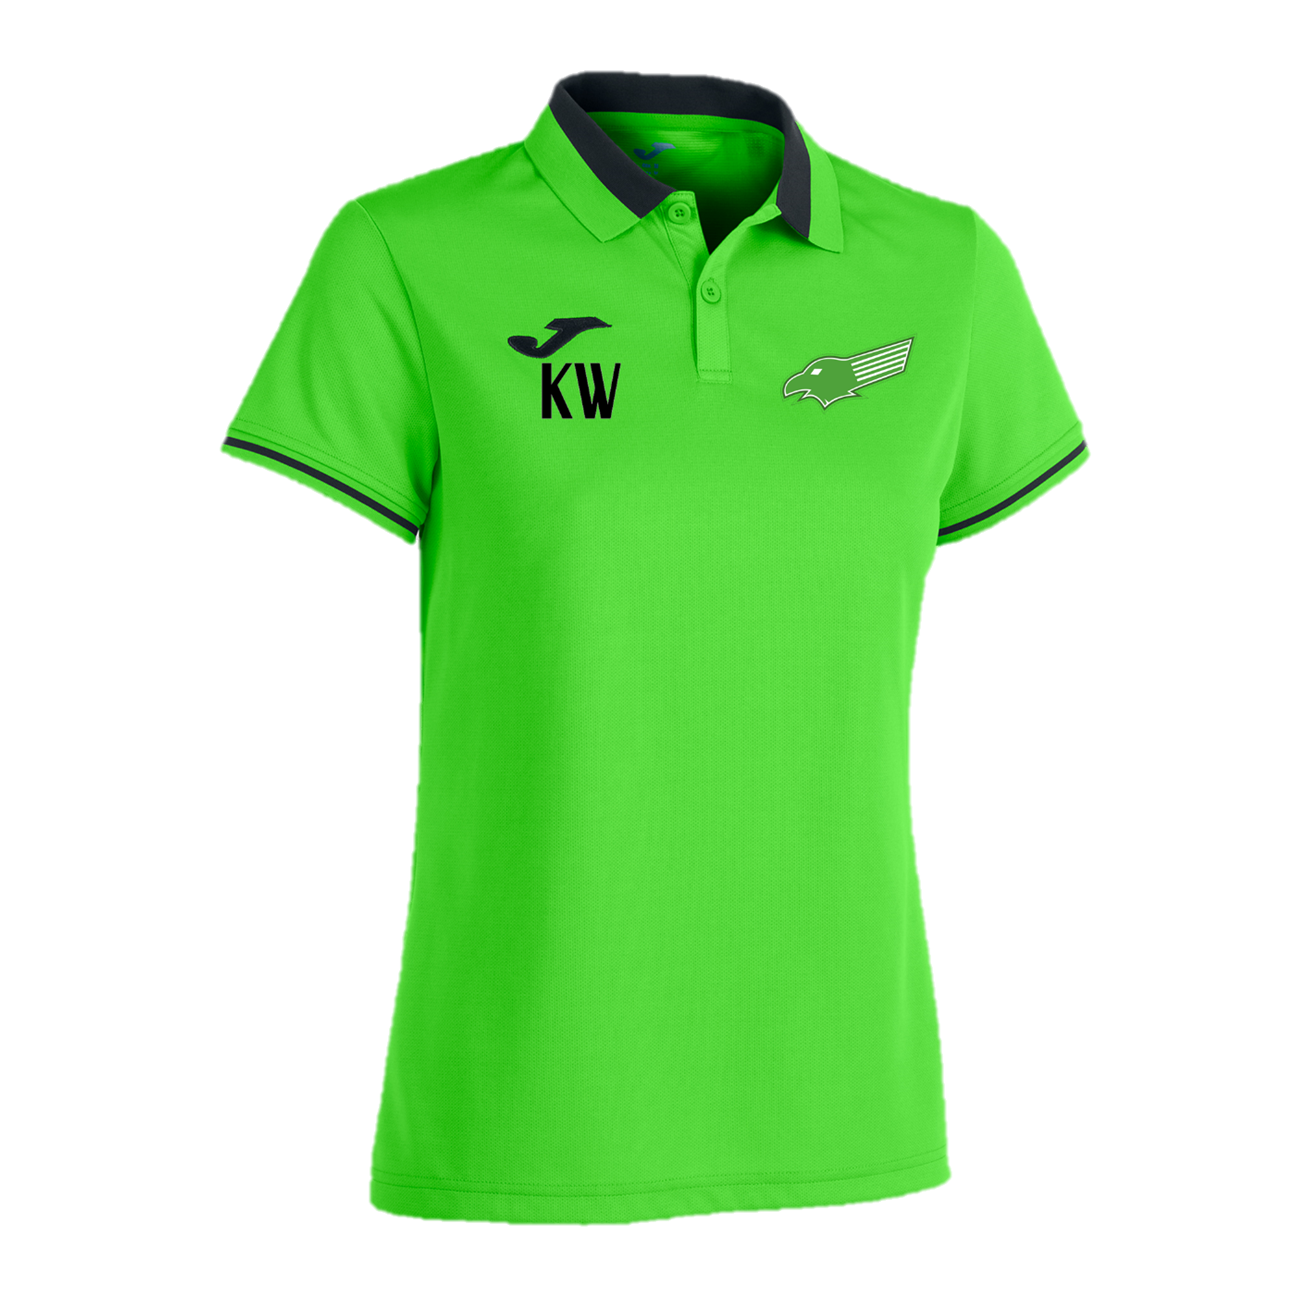 Kewford Eagles Eco Manager/Coach Ladies Polo Shirt